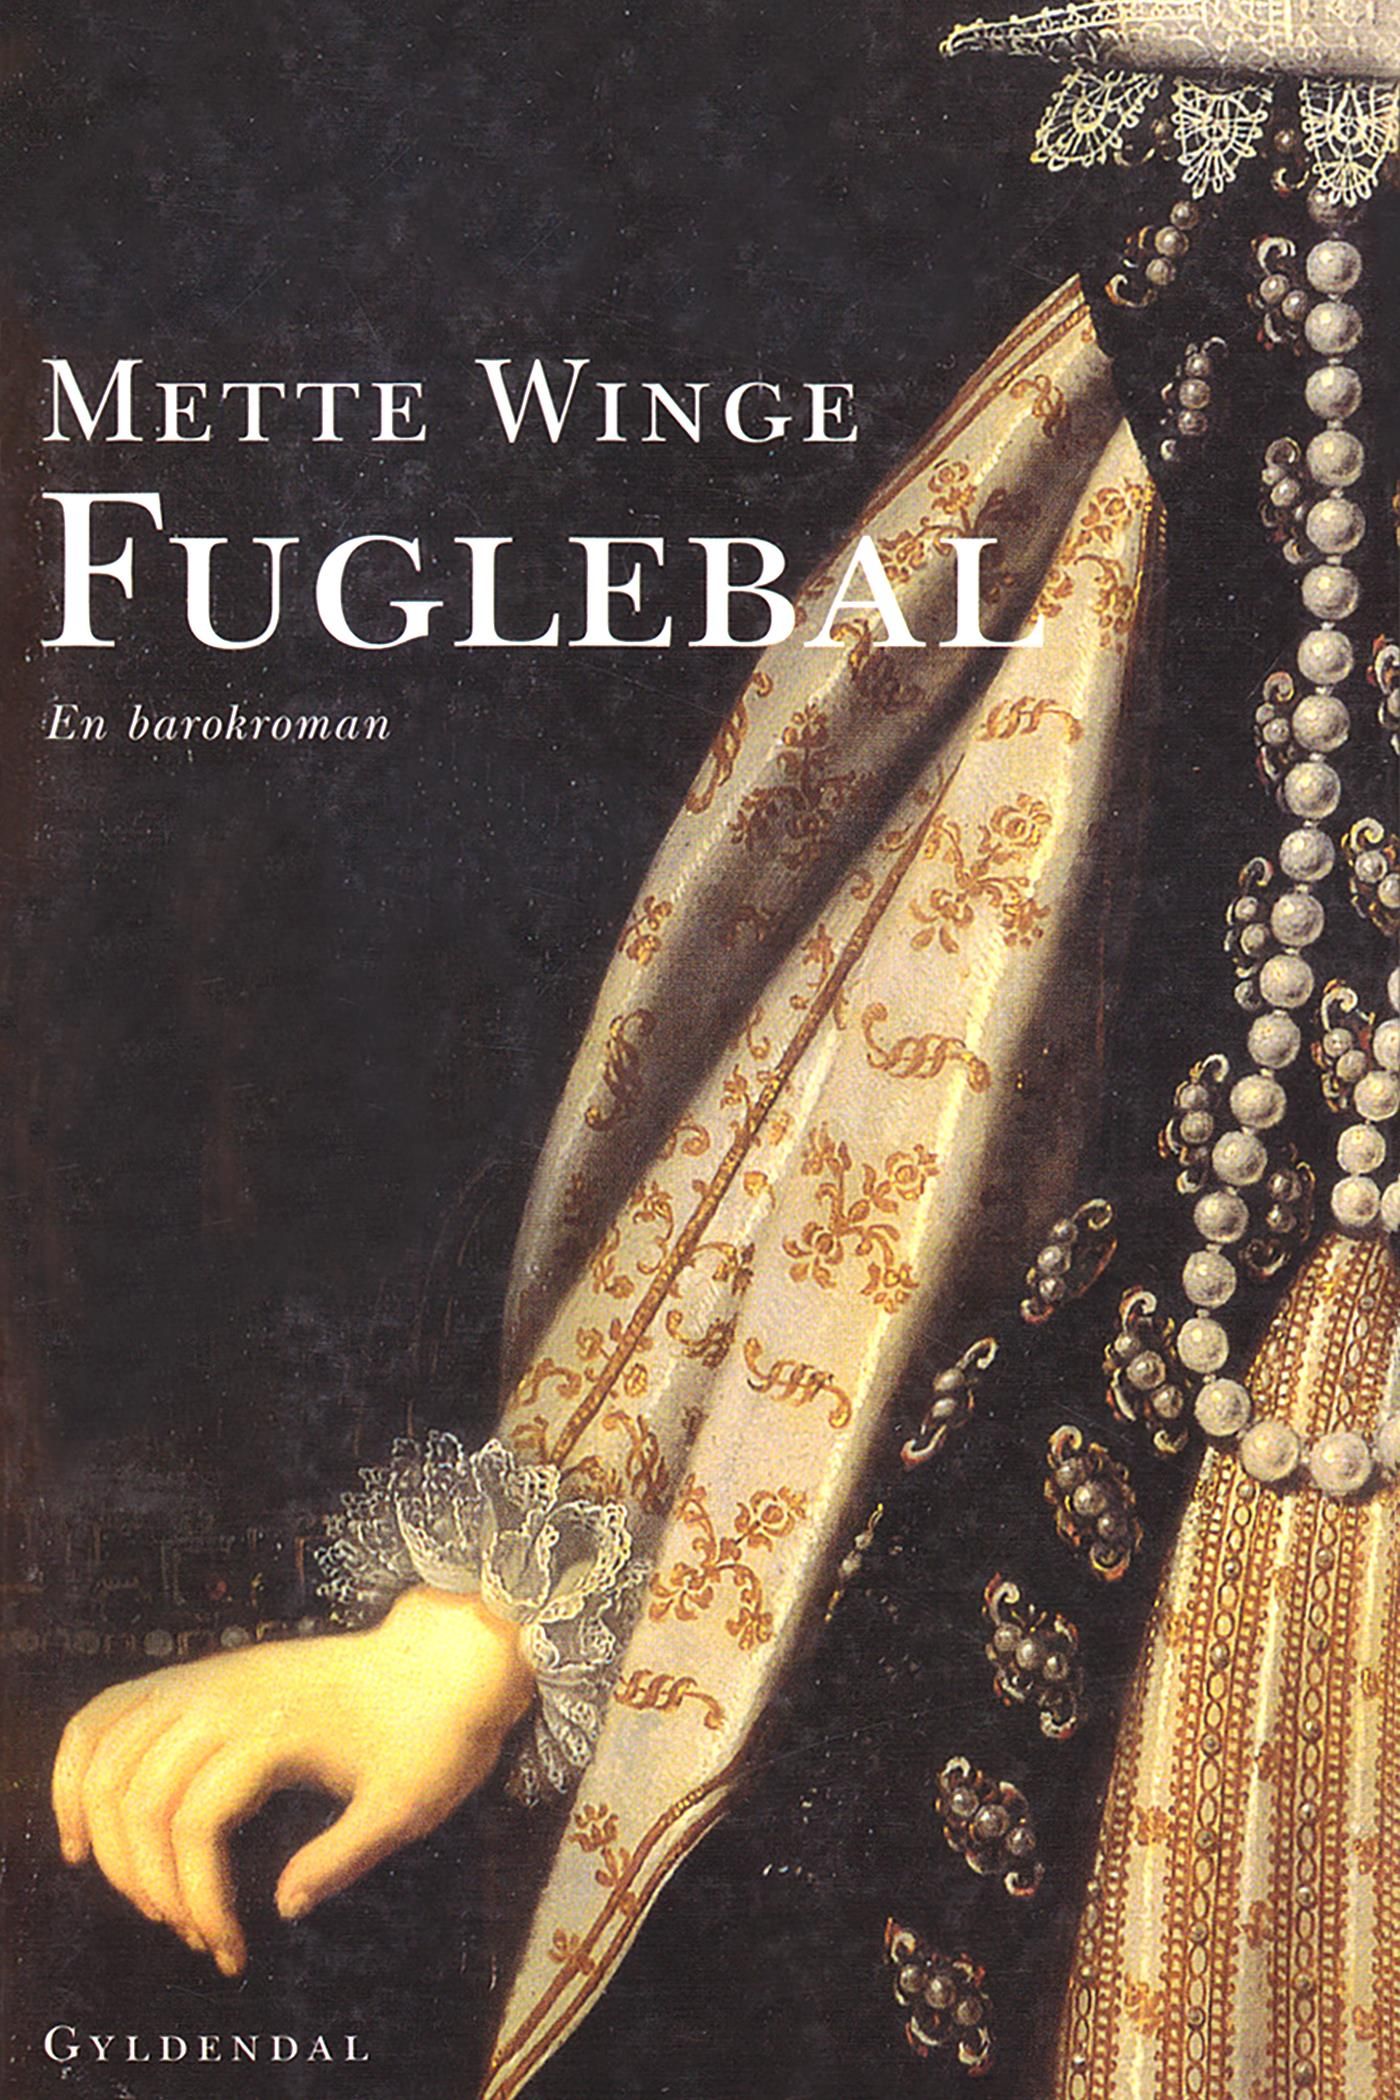 Fuglebal, eBook by Mette Winge